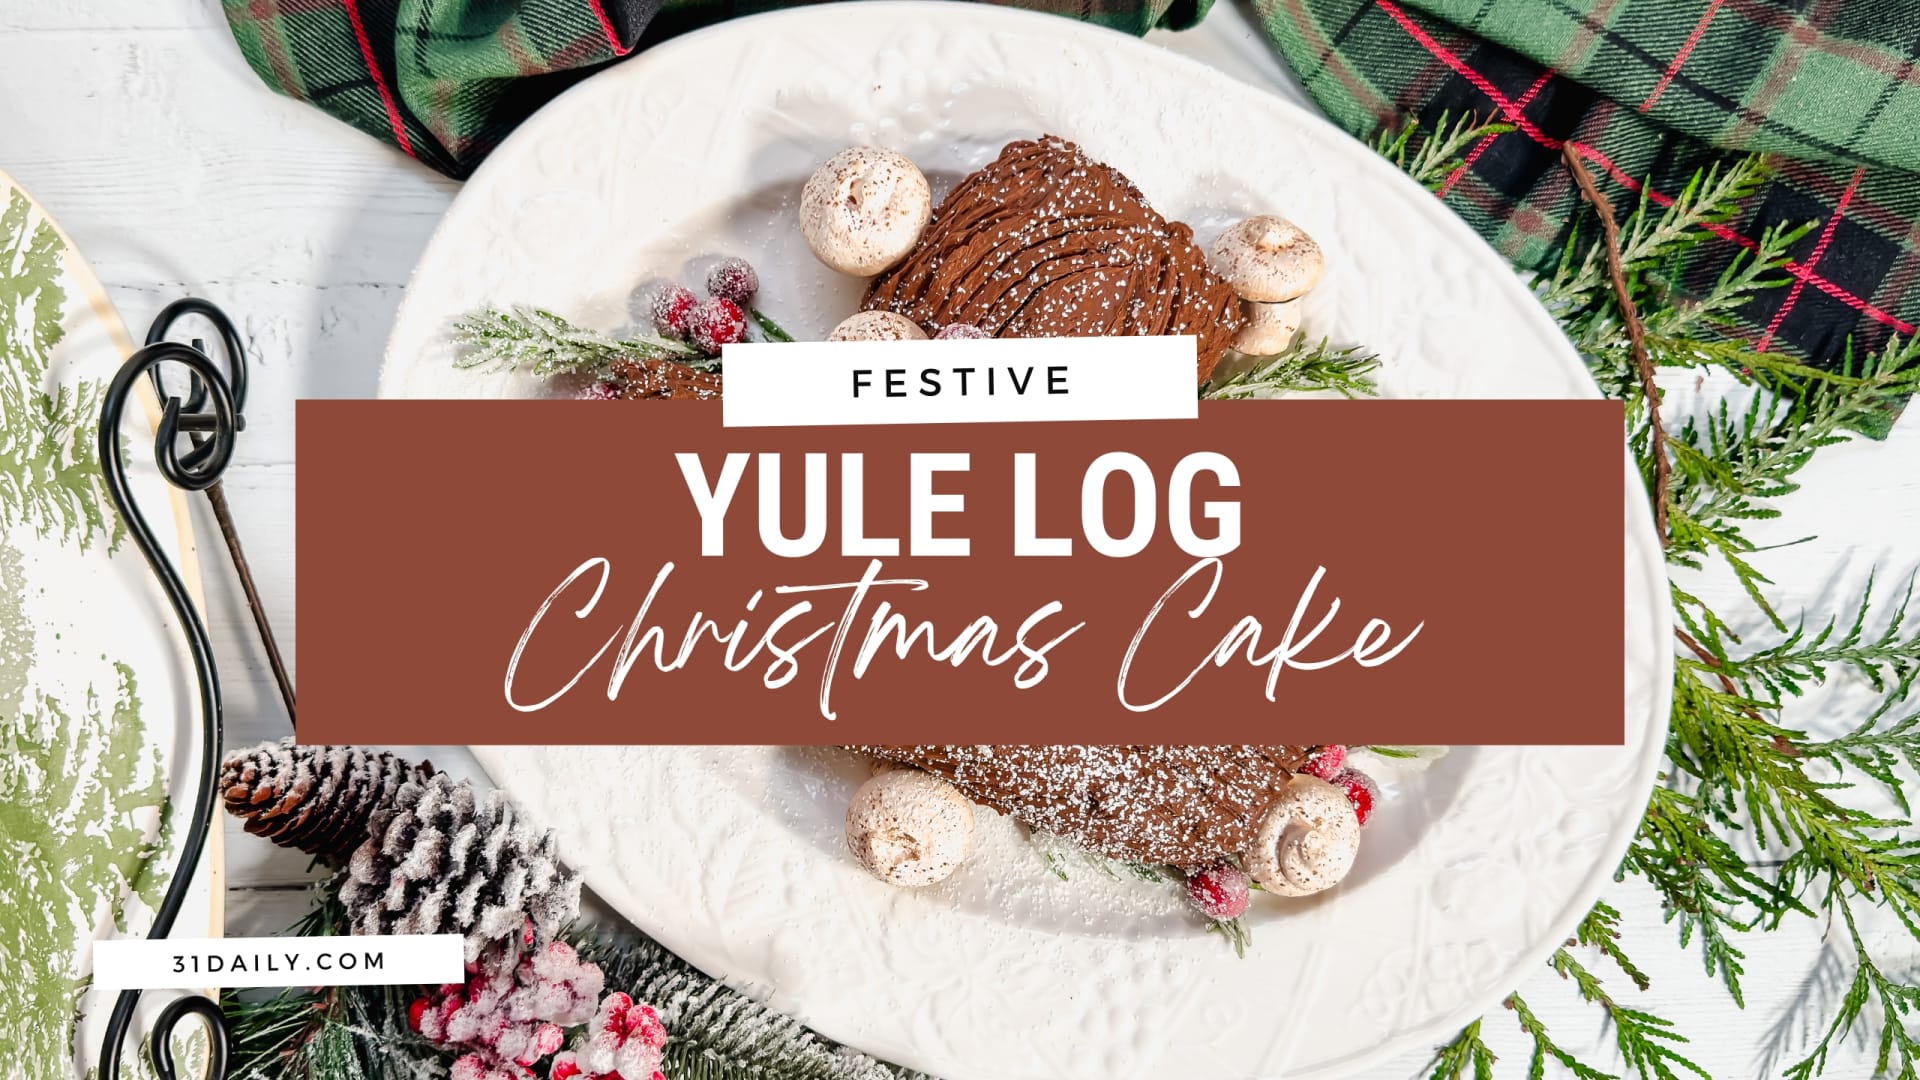 Christmas Yule Log- Bûche de Noël - G'day Soufflé